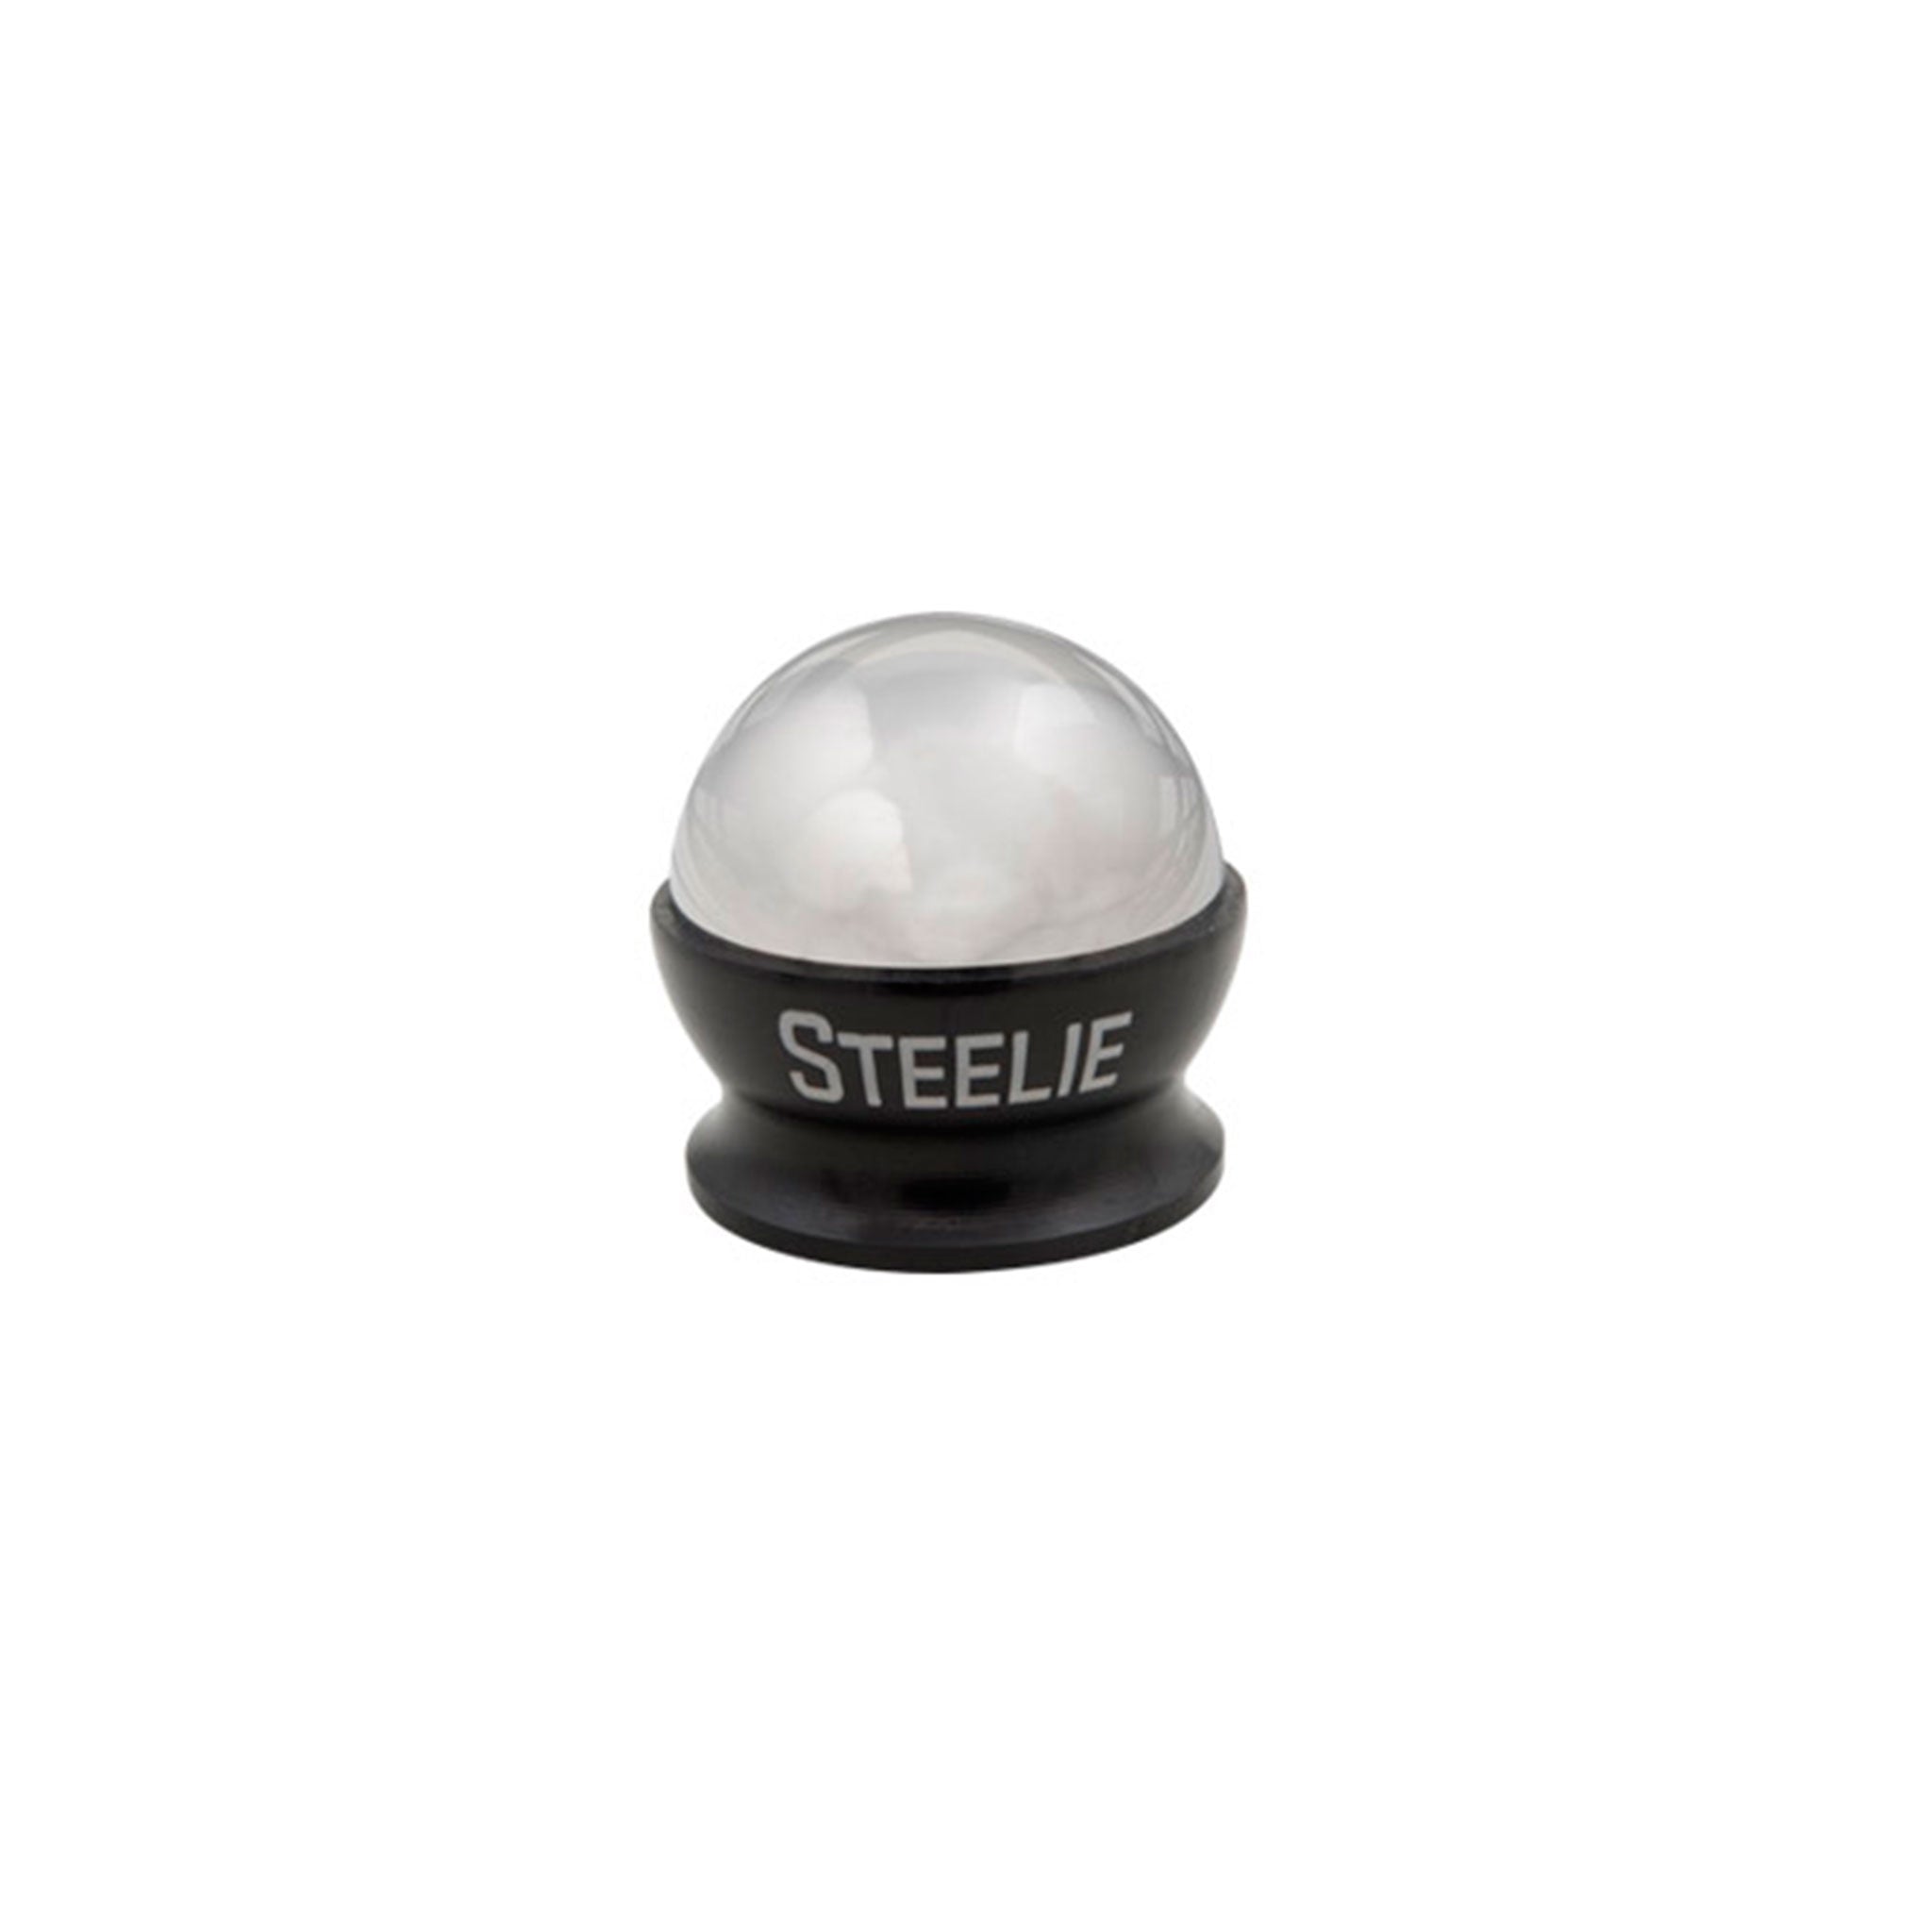 Nite Ize - Steelie Dash Ball Component - Silver And Black